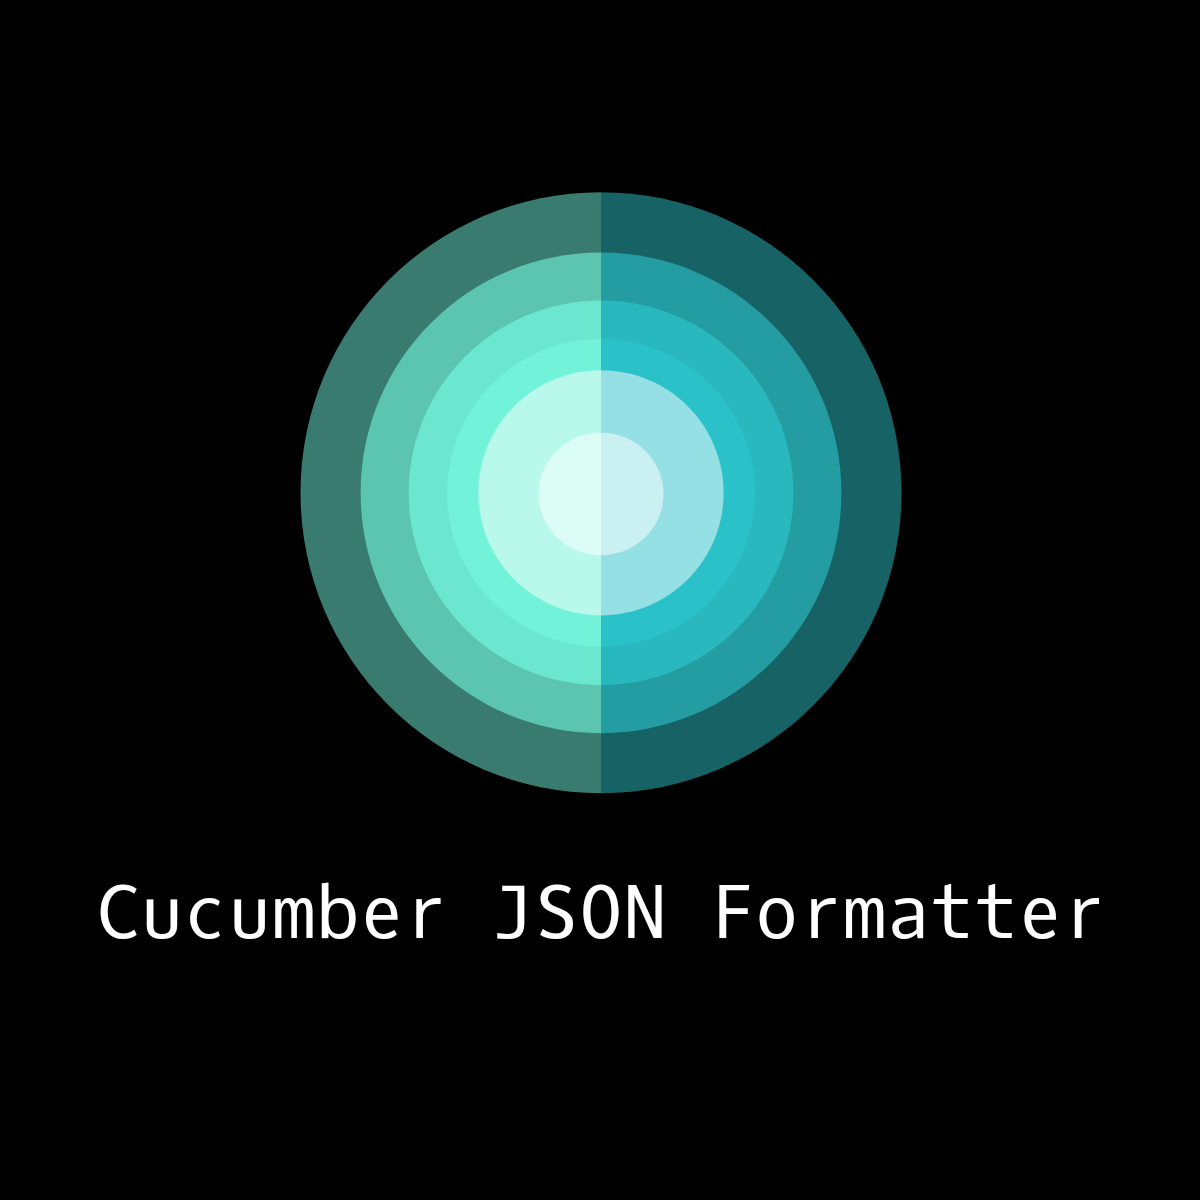 Cucumber JSON formatter